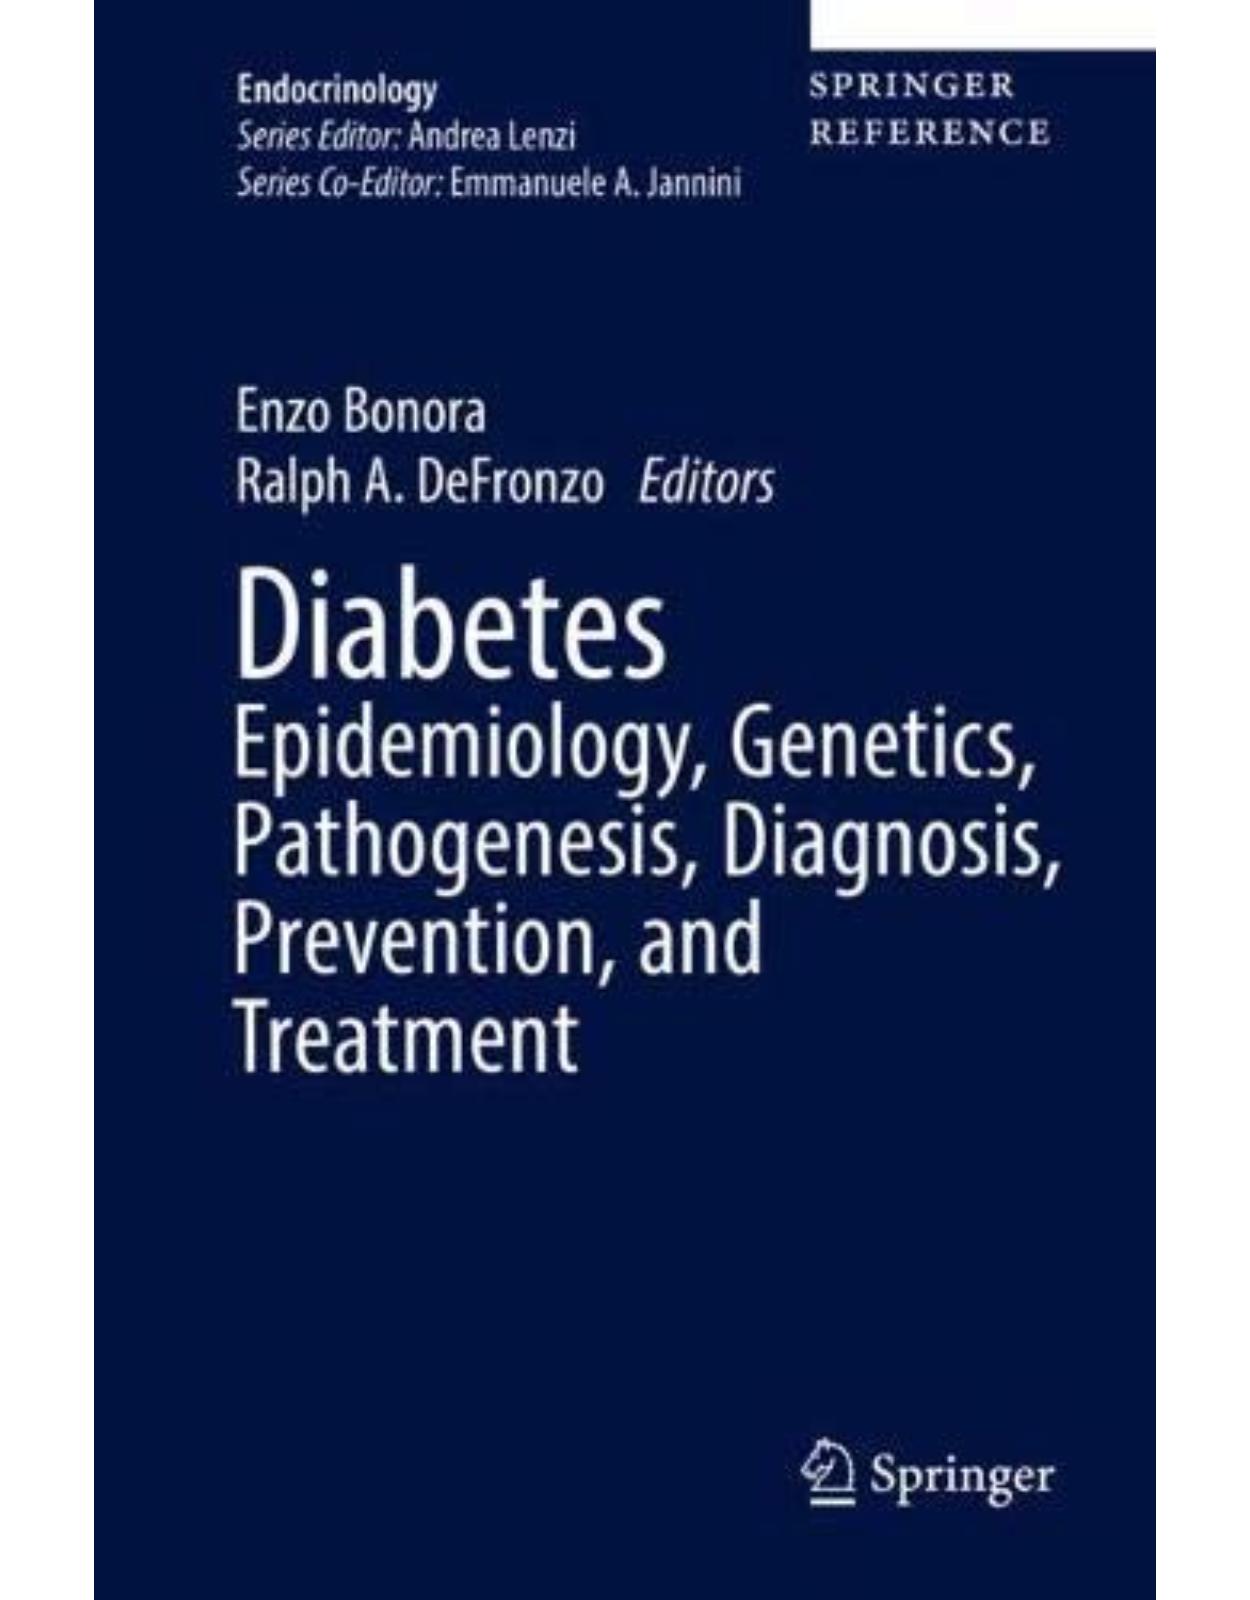 Diabetes. Epidemiology, Genetics, Pathogenesis, Diagnosis, Prevention, and Treatment